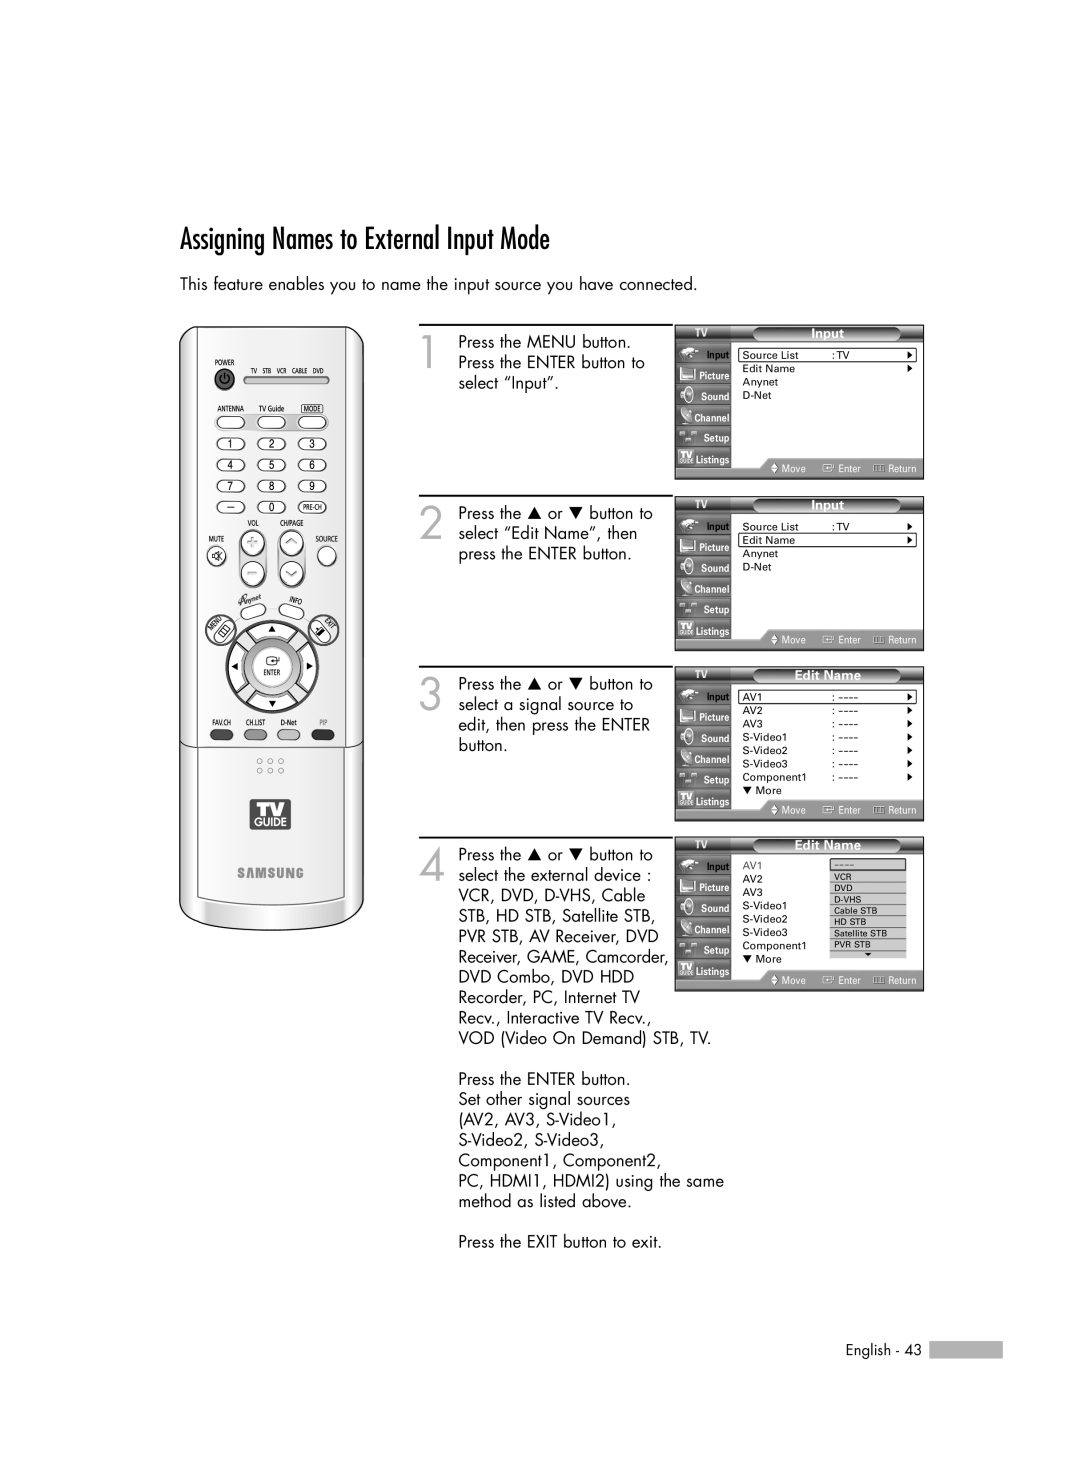 Samsung HL-R5678W, HL-R6178W, HL-R7178W manual Assigning Names to External Input Mode 